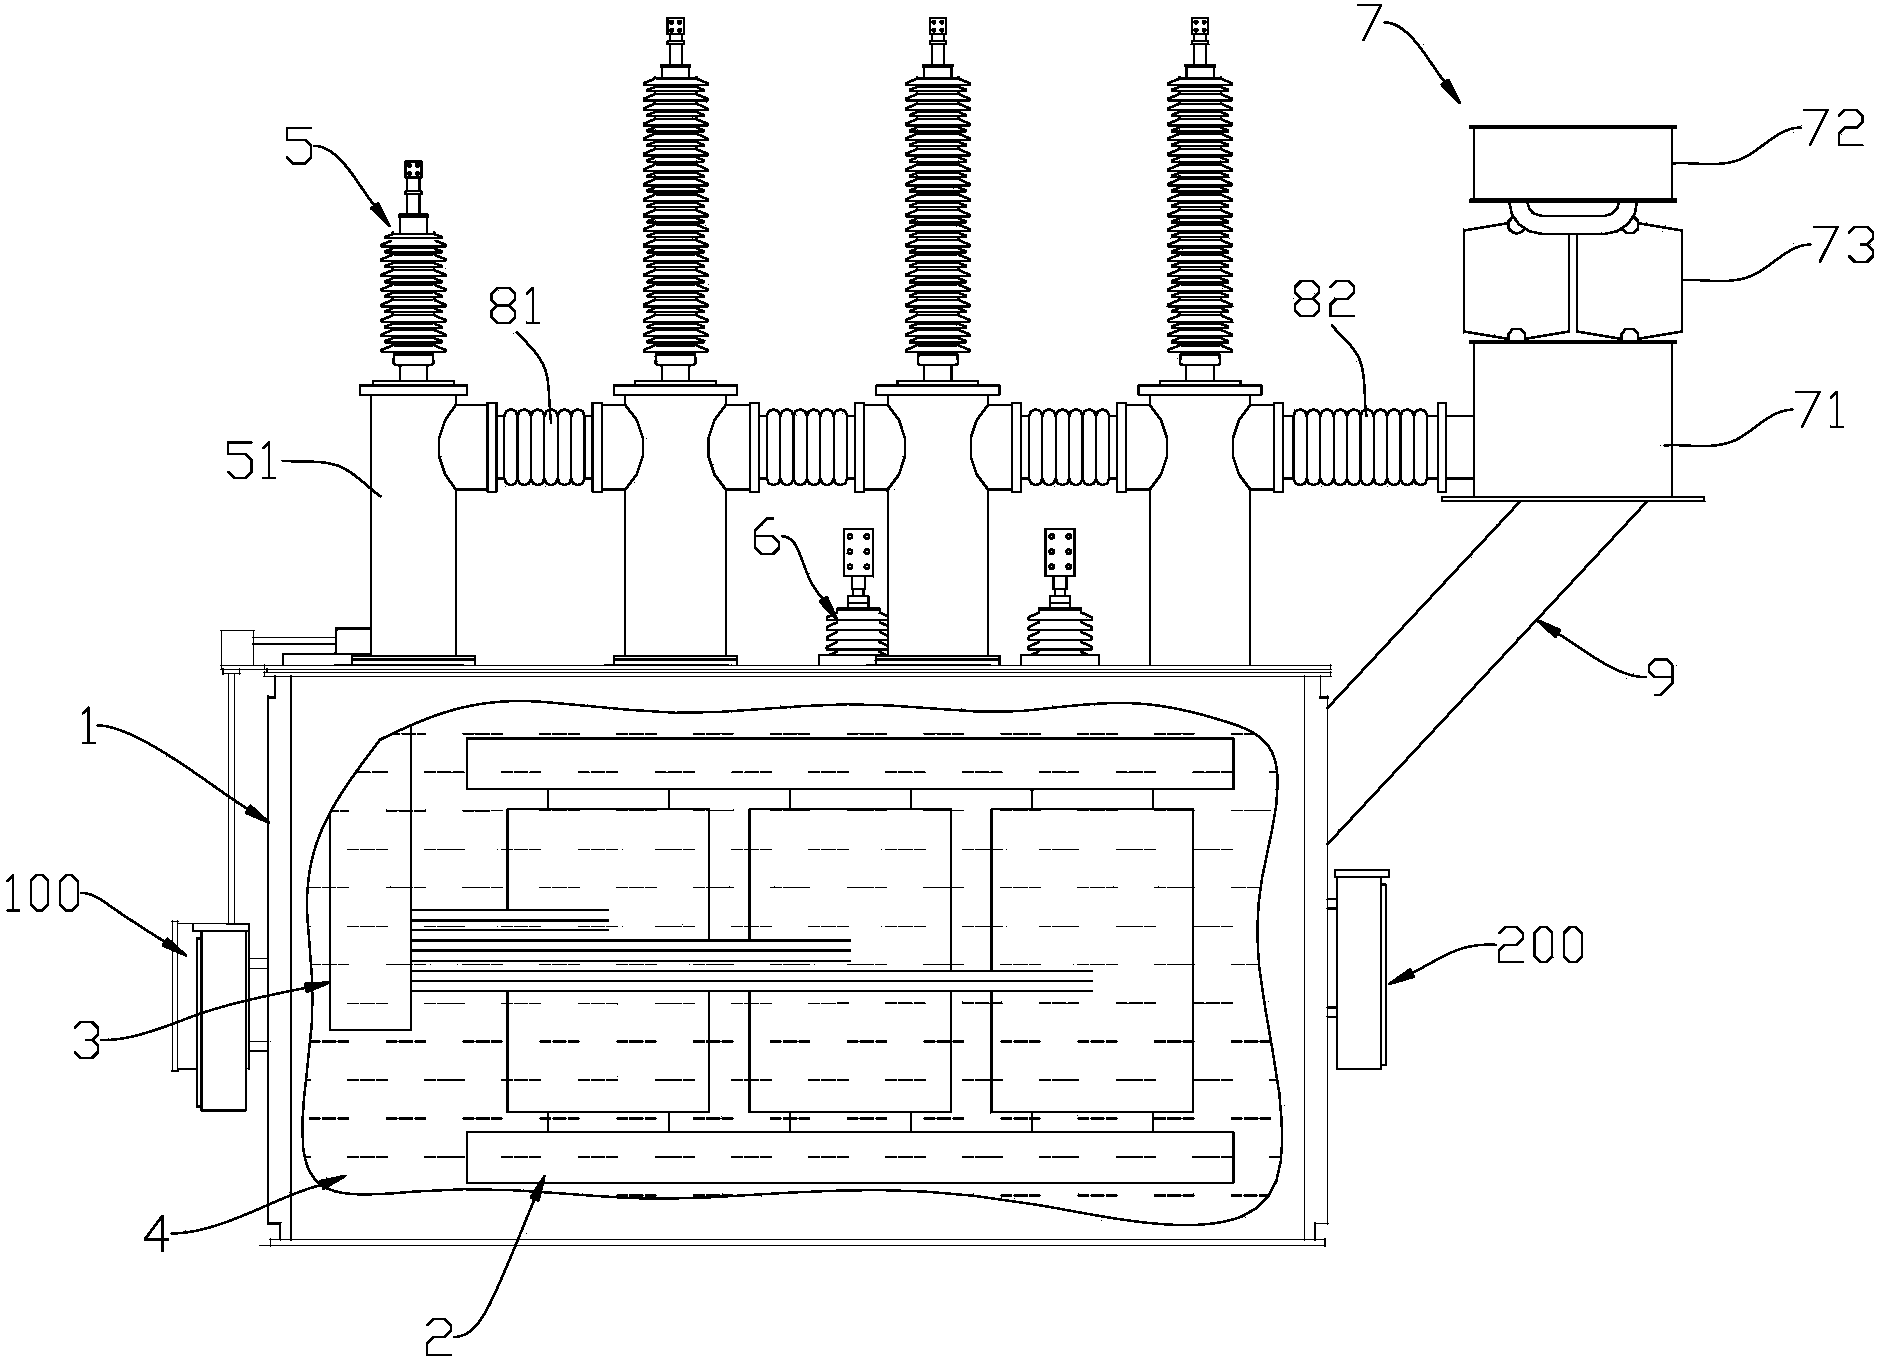 Evaporative cooling power transformer